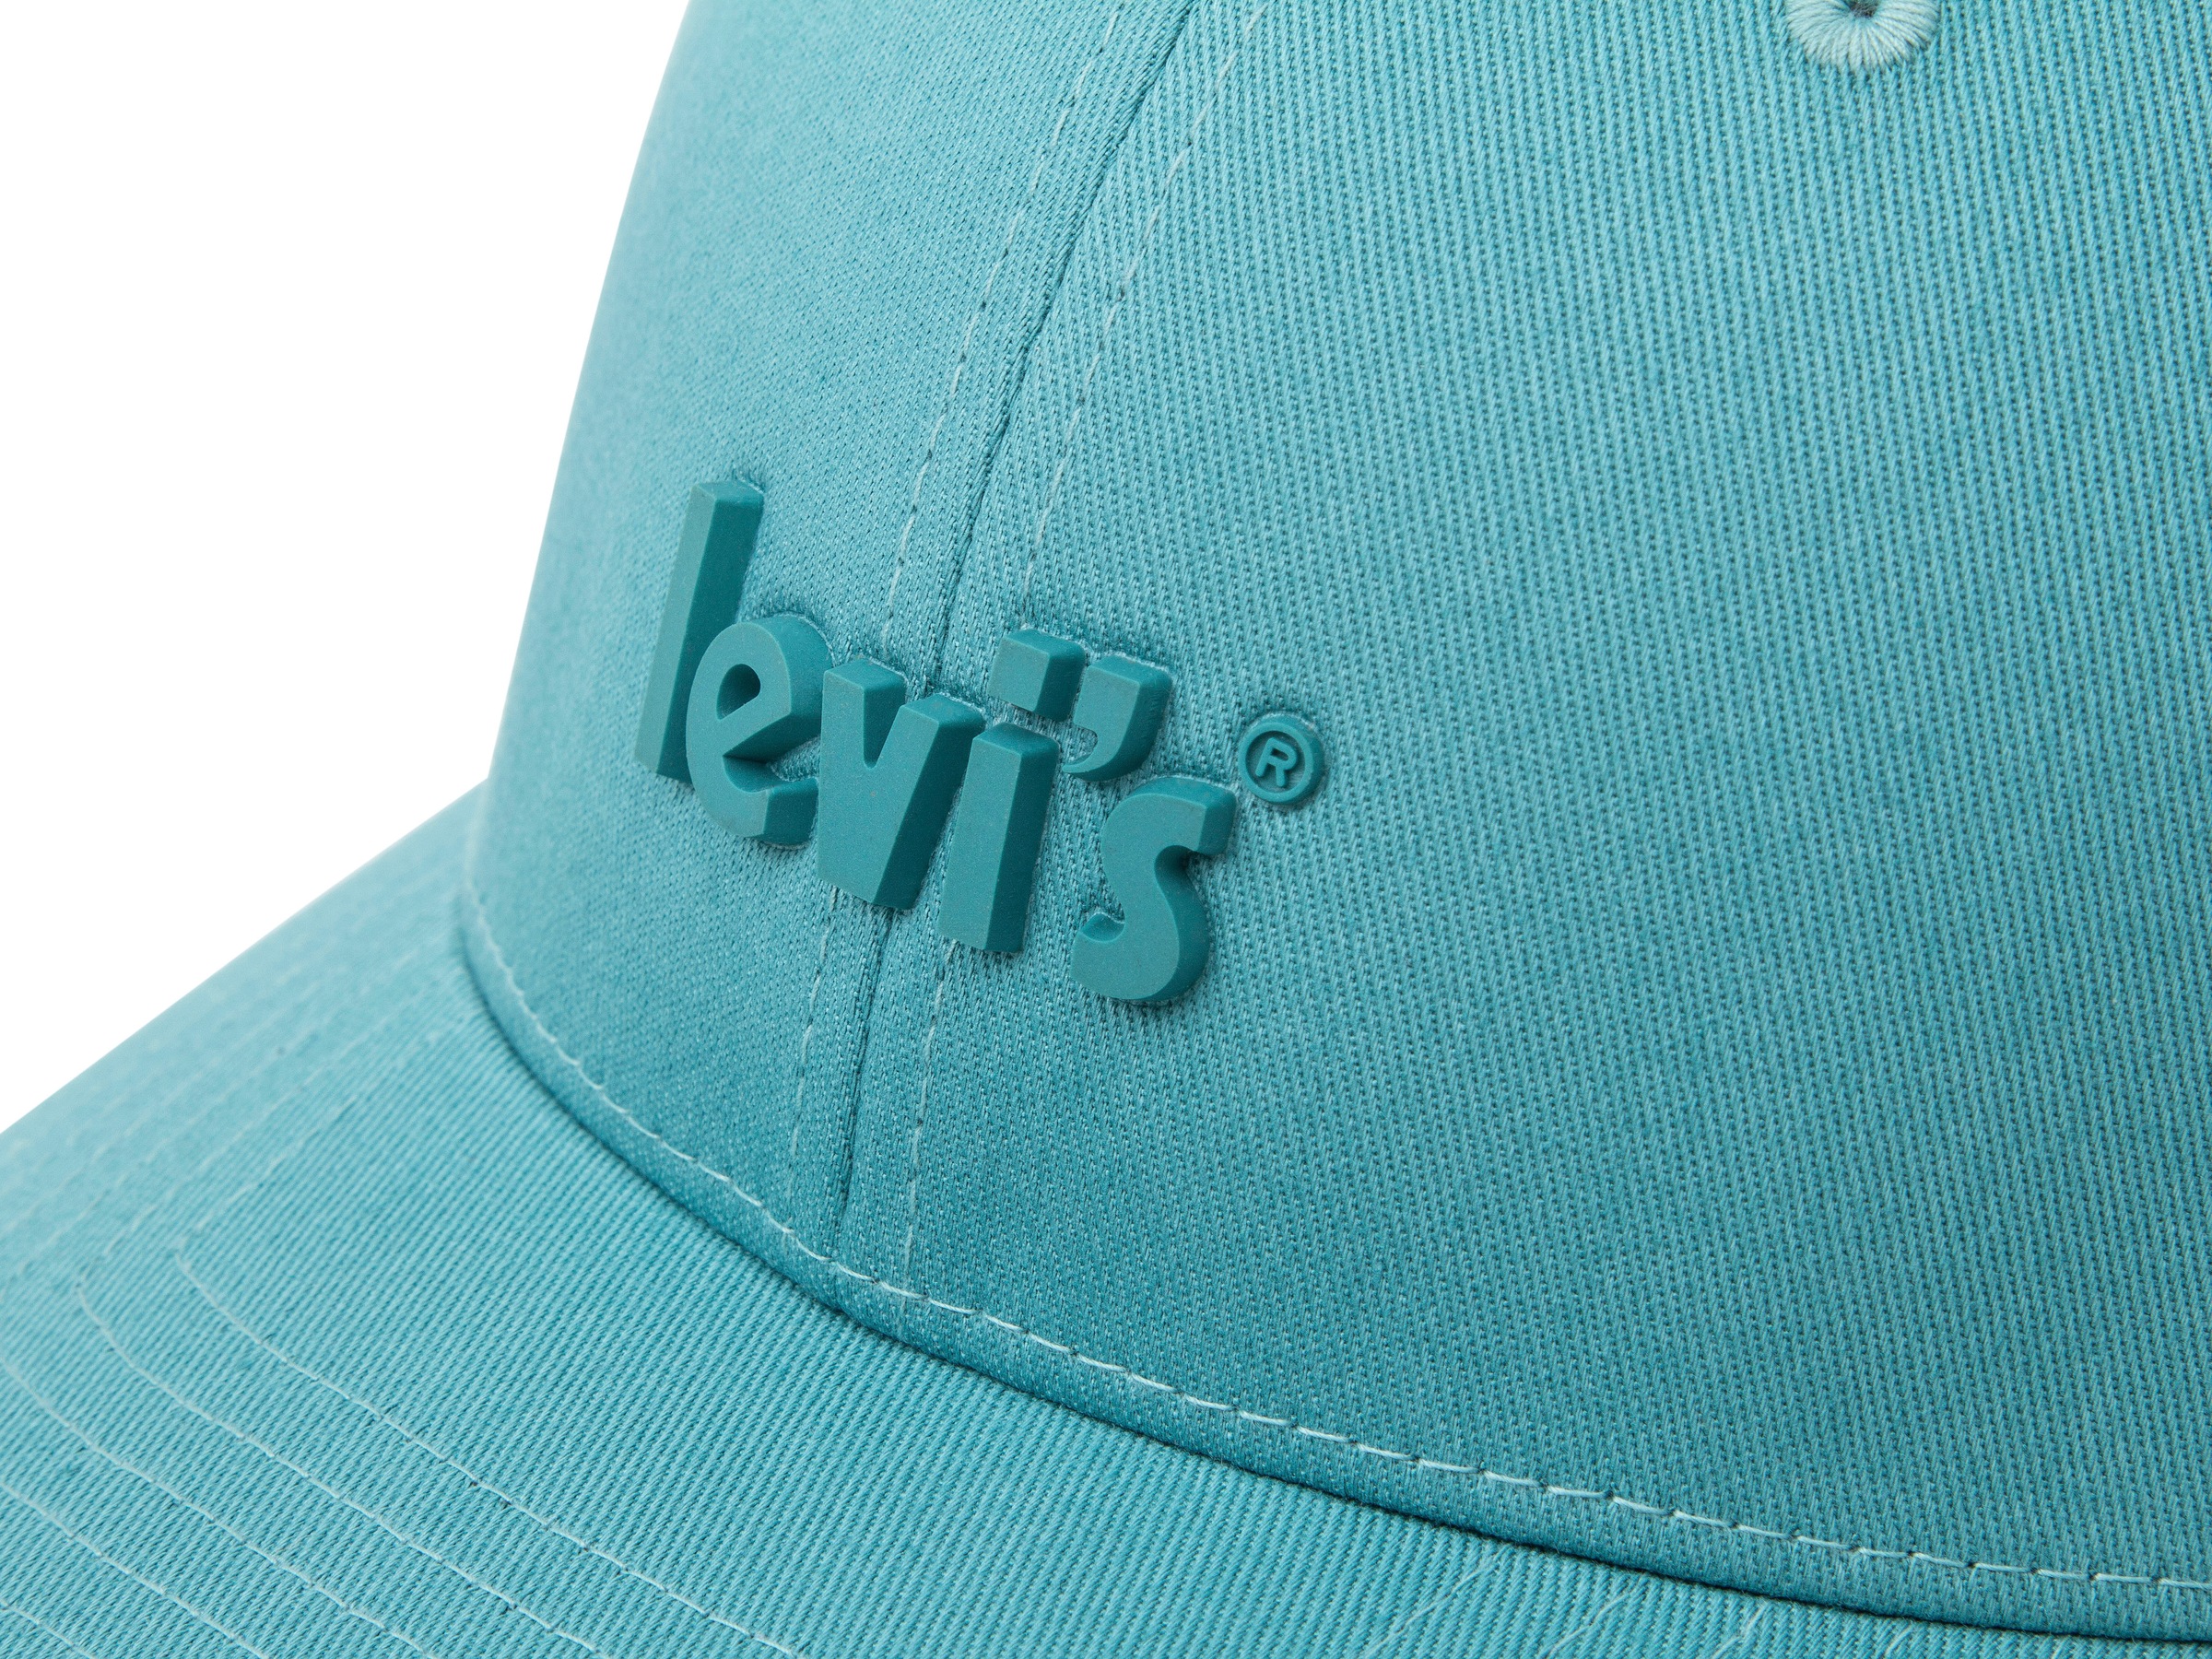 Levi's® Baseball Cap »UNISEX«, Poster Logo Flexfit Cap